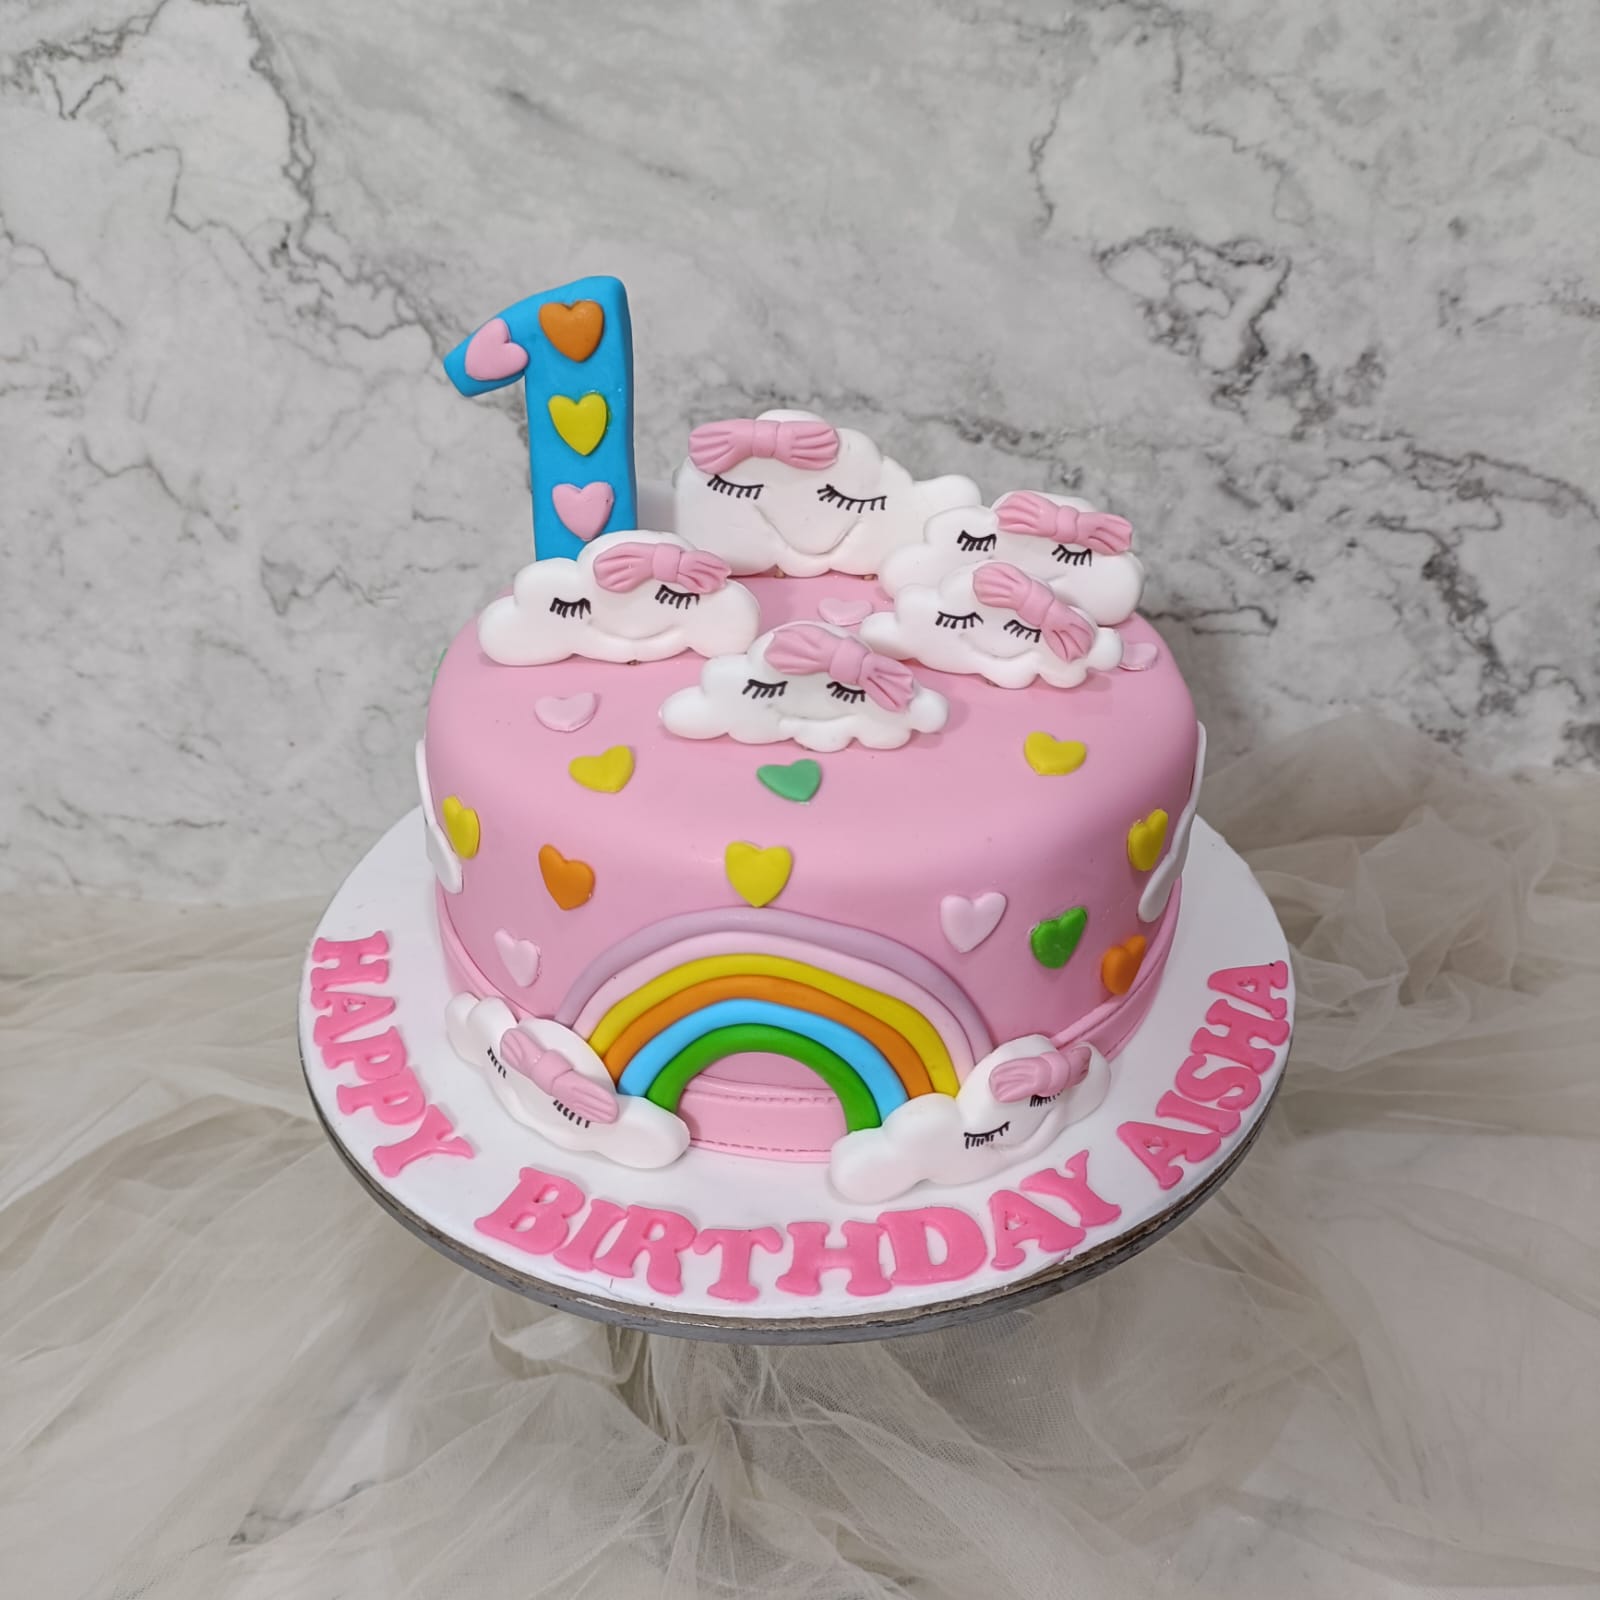 Rainbow Petal Cake Recipe - BettyCrocker.com